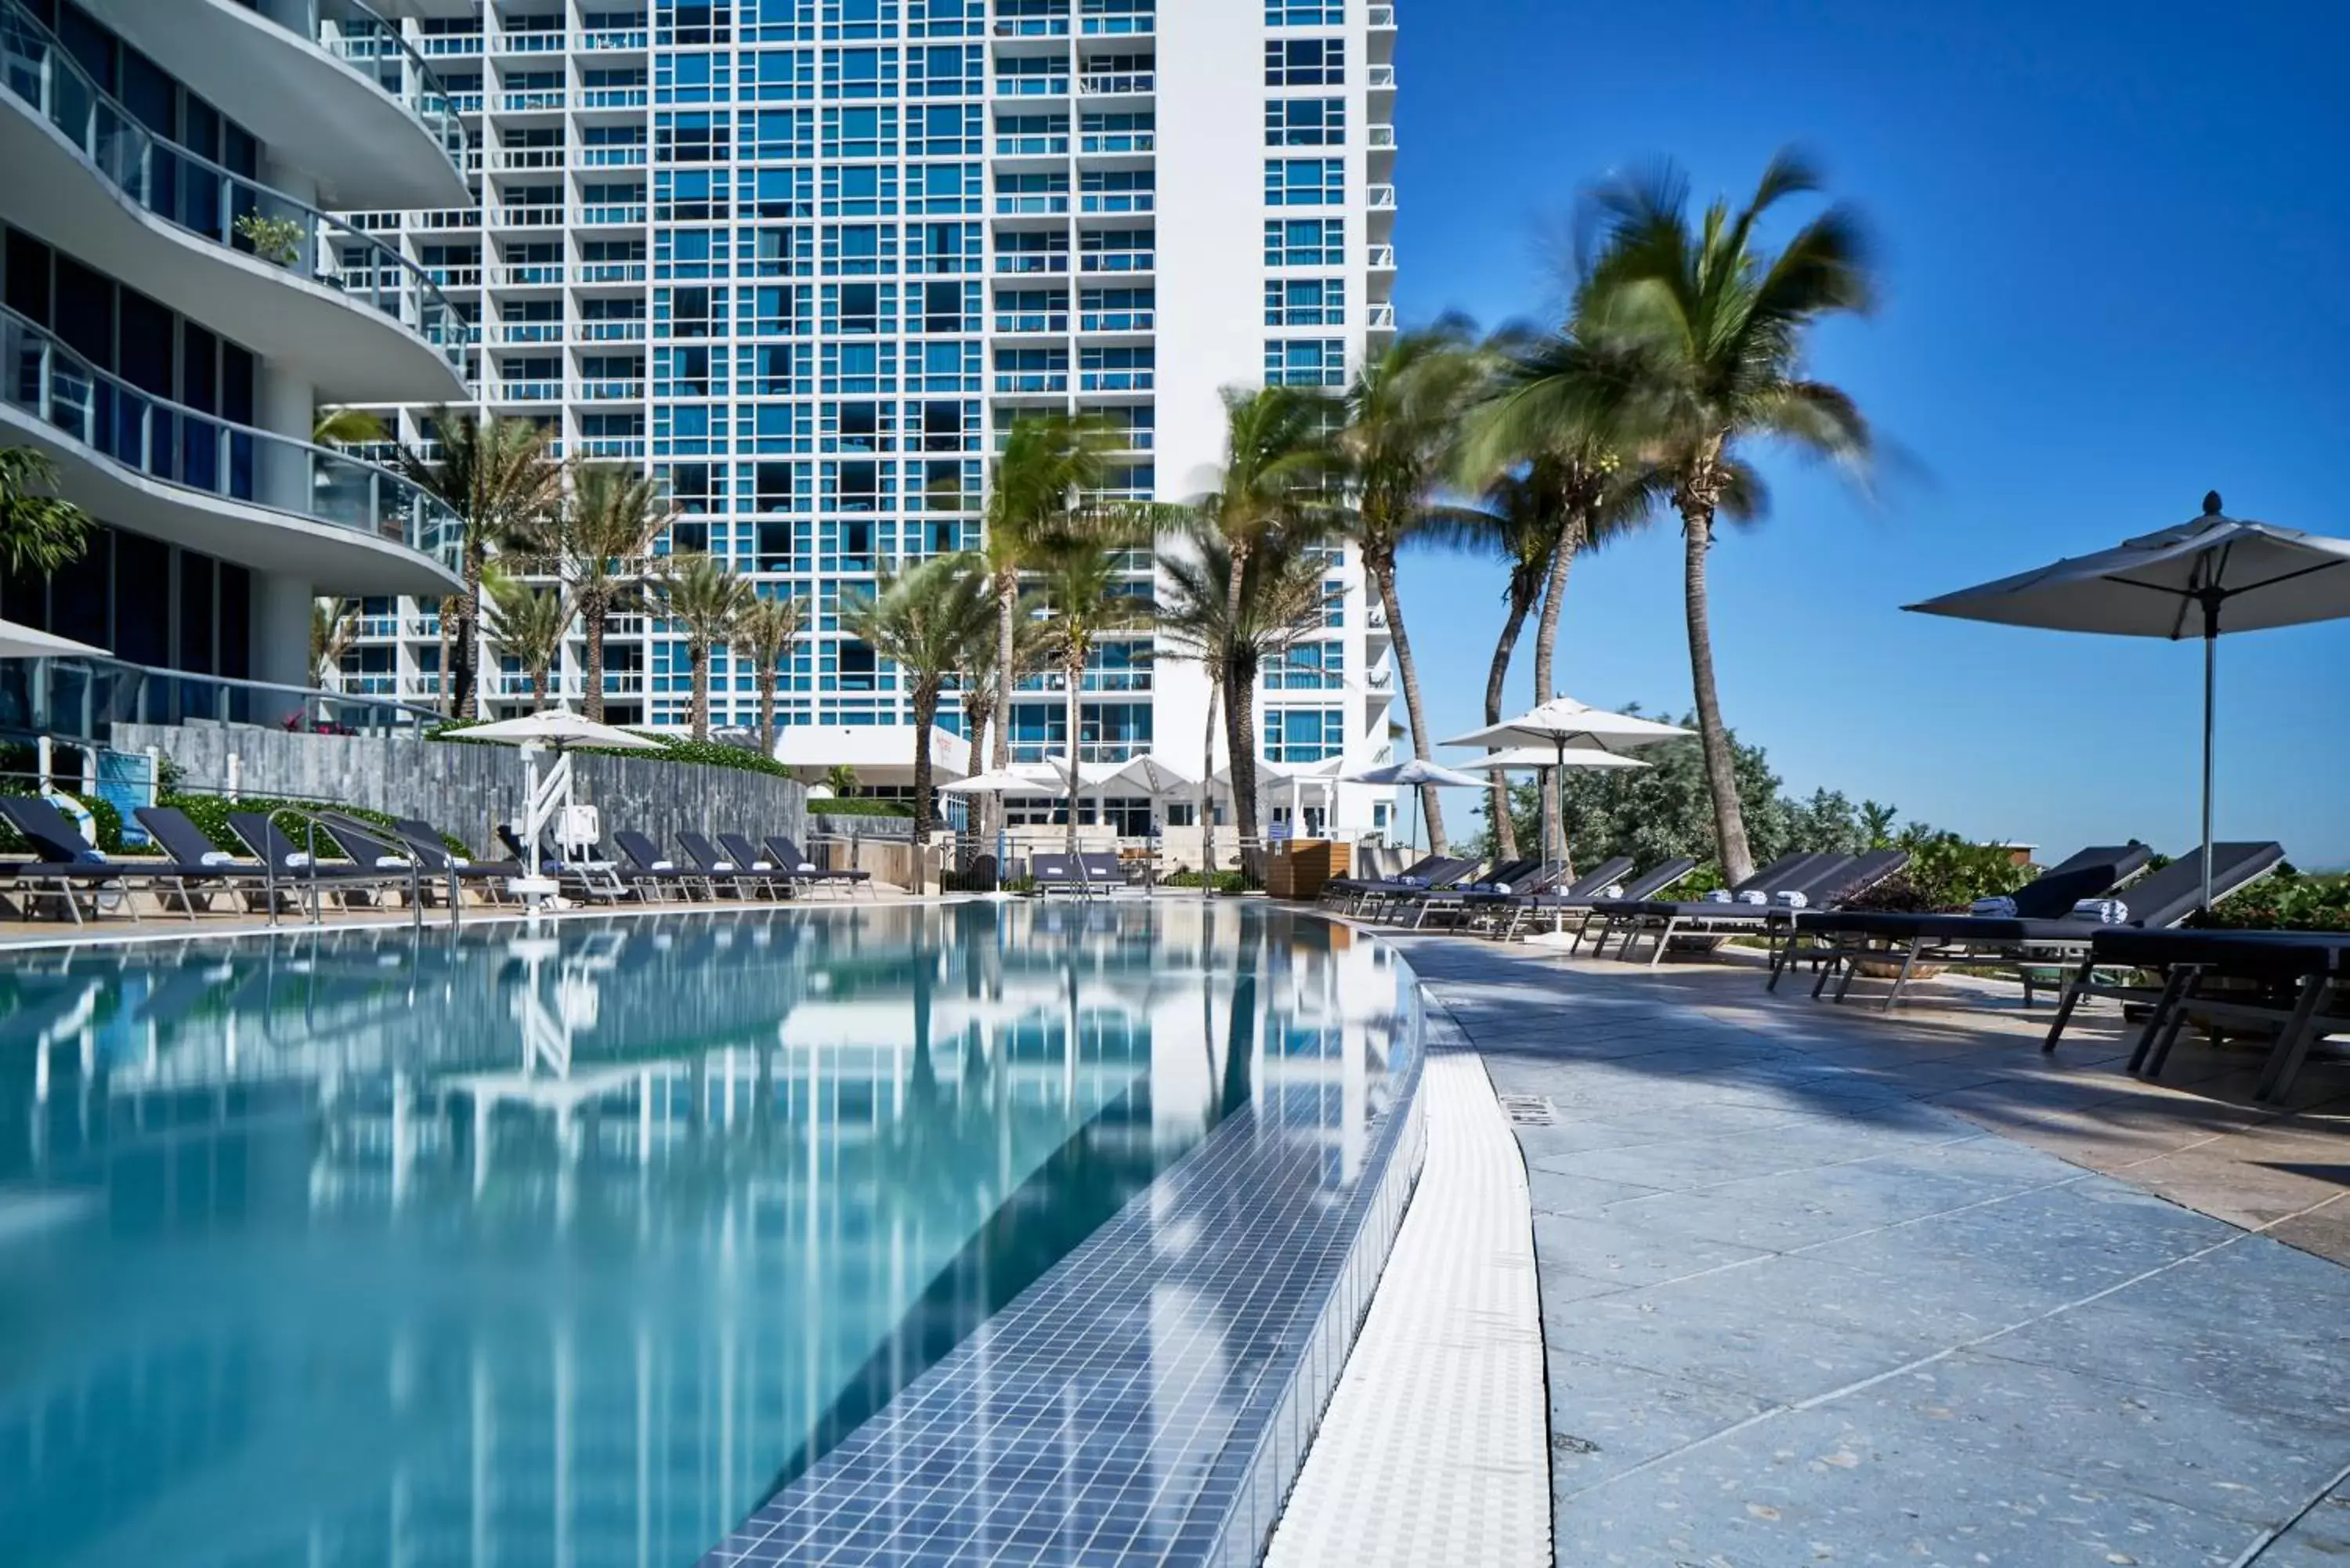 Swimming Pool in Carillon Miami Wellness Resort